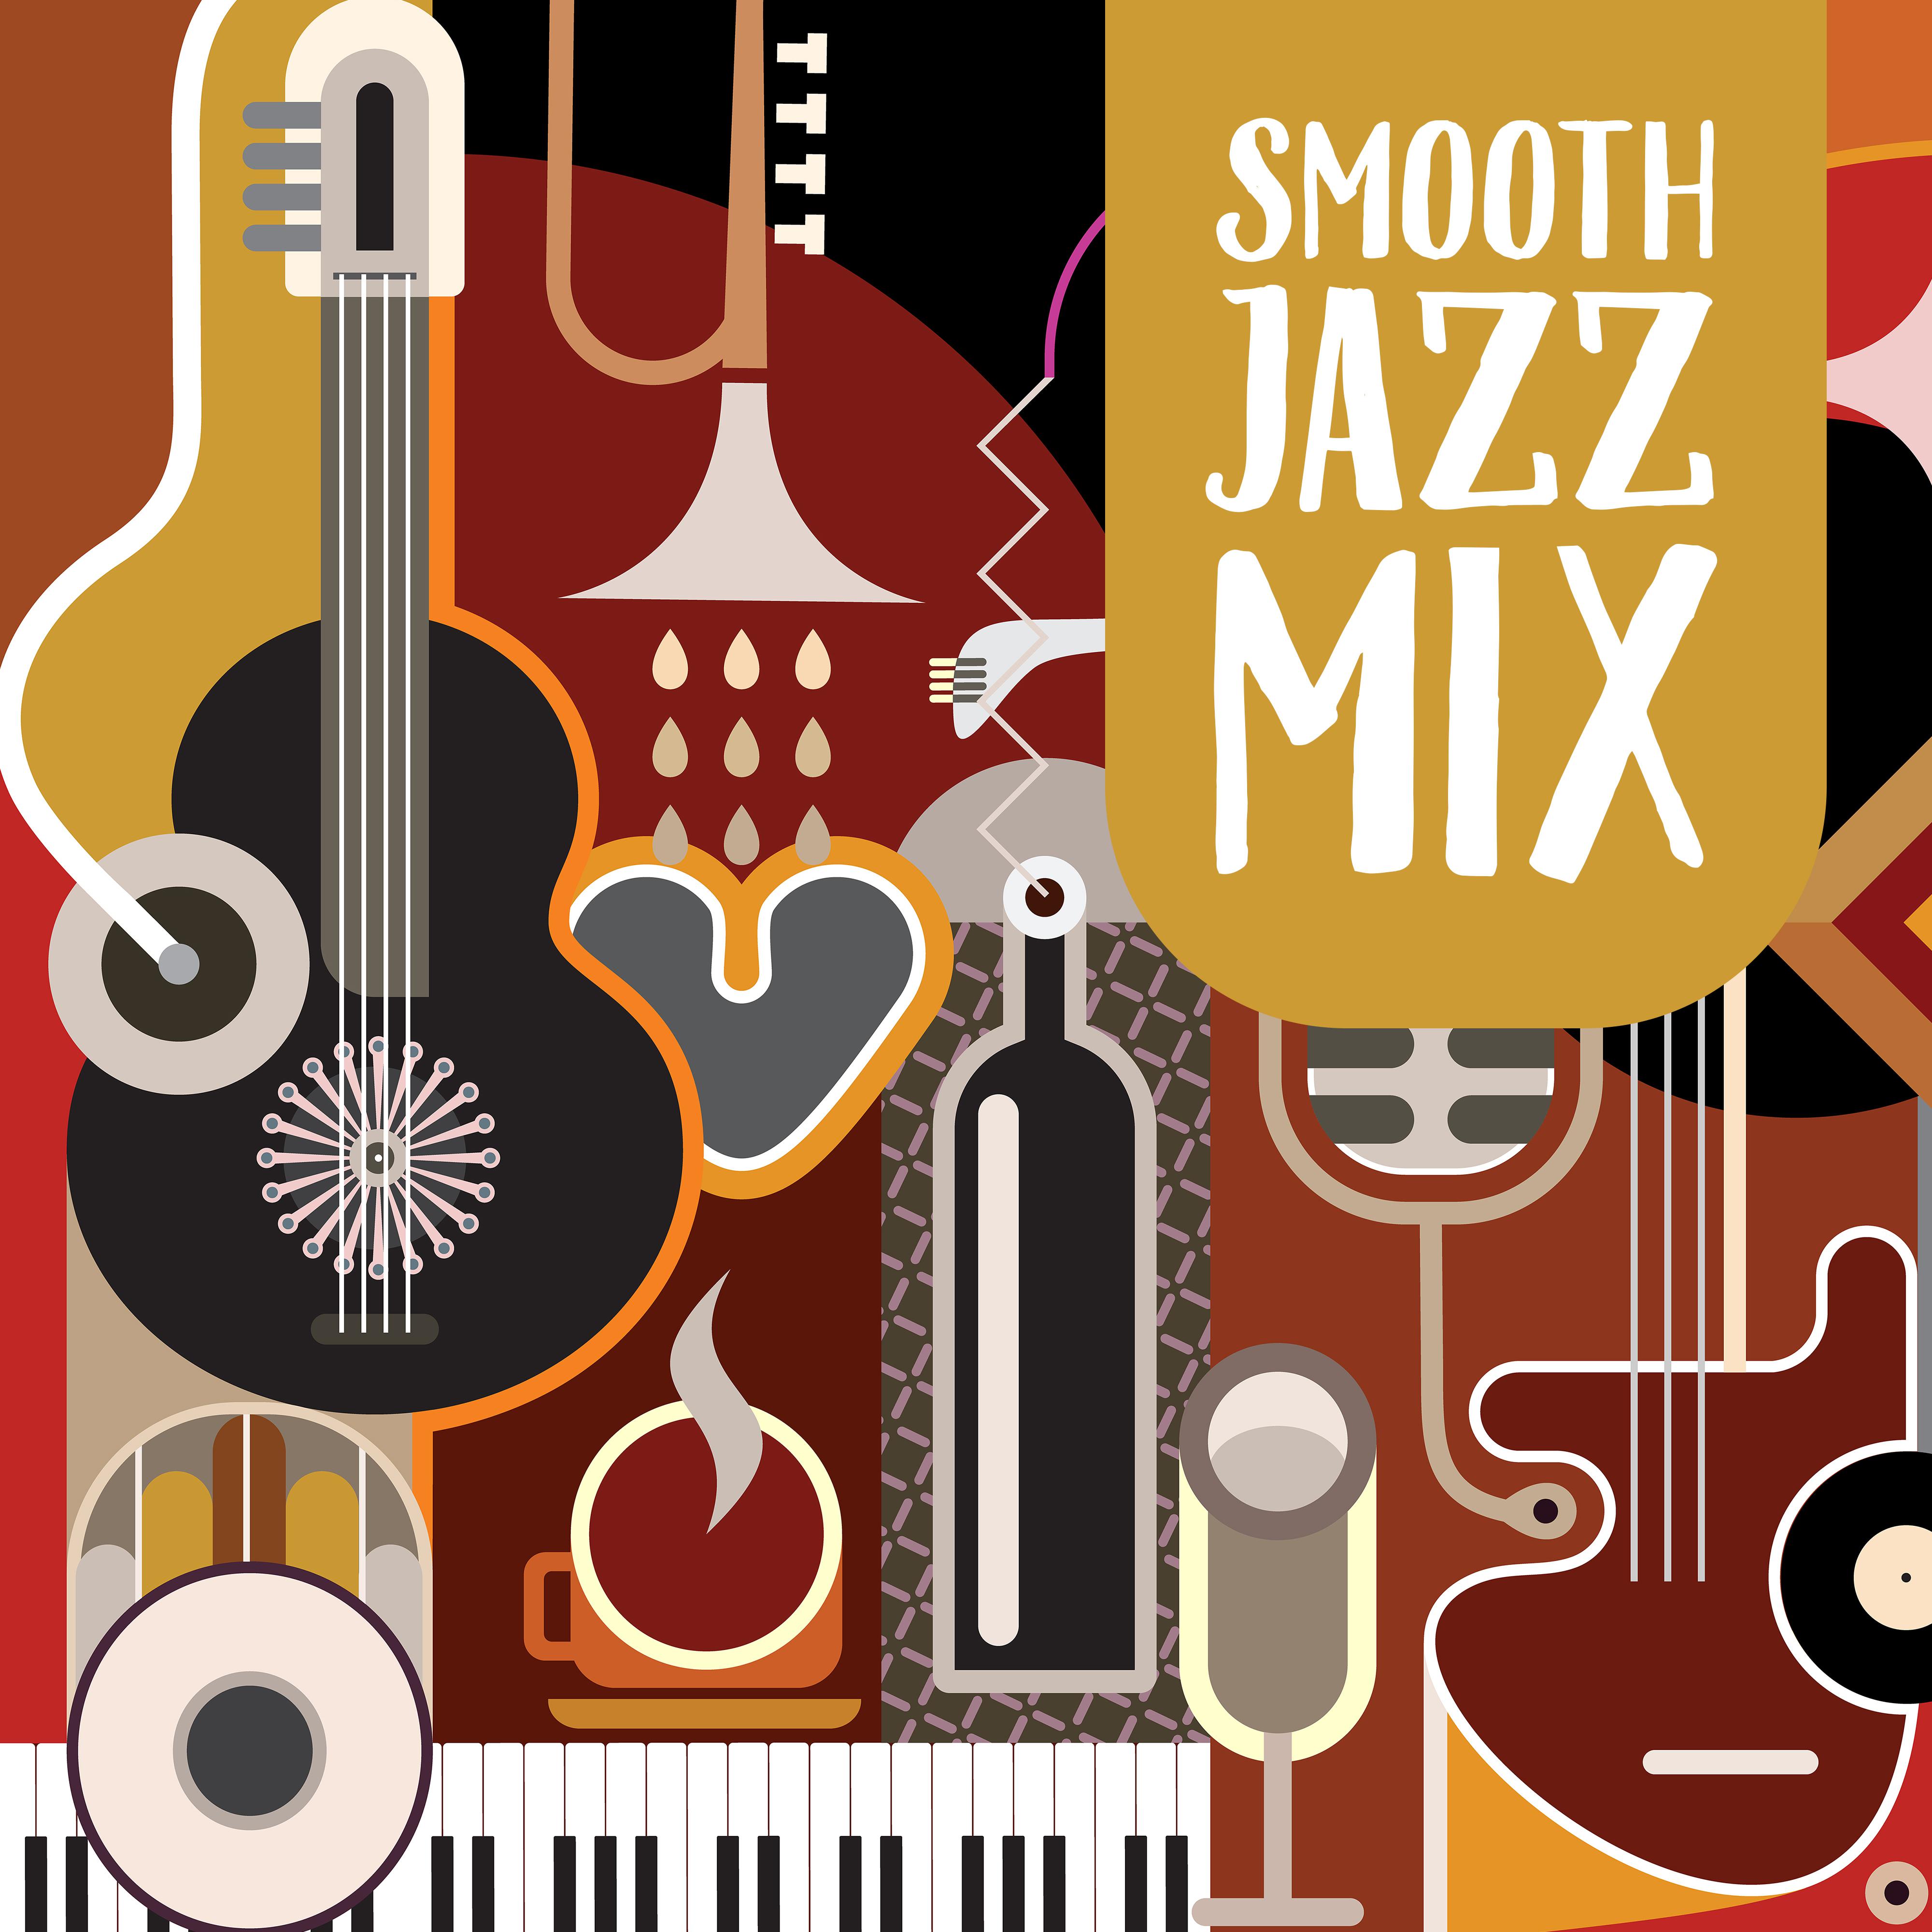 Smooth Jazz Mix